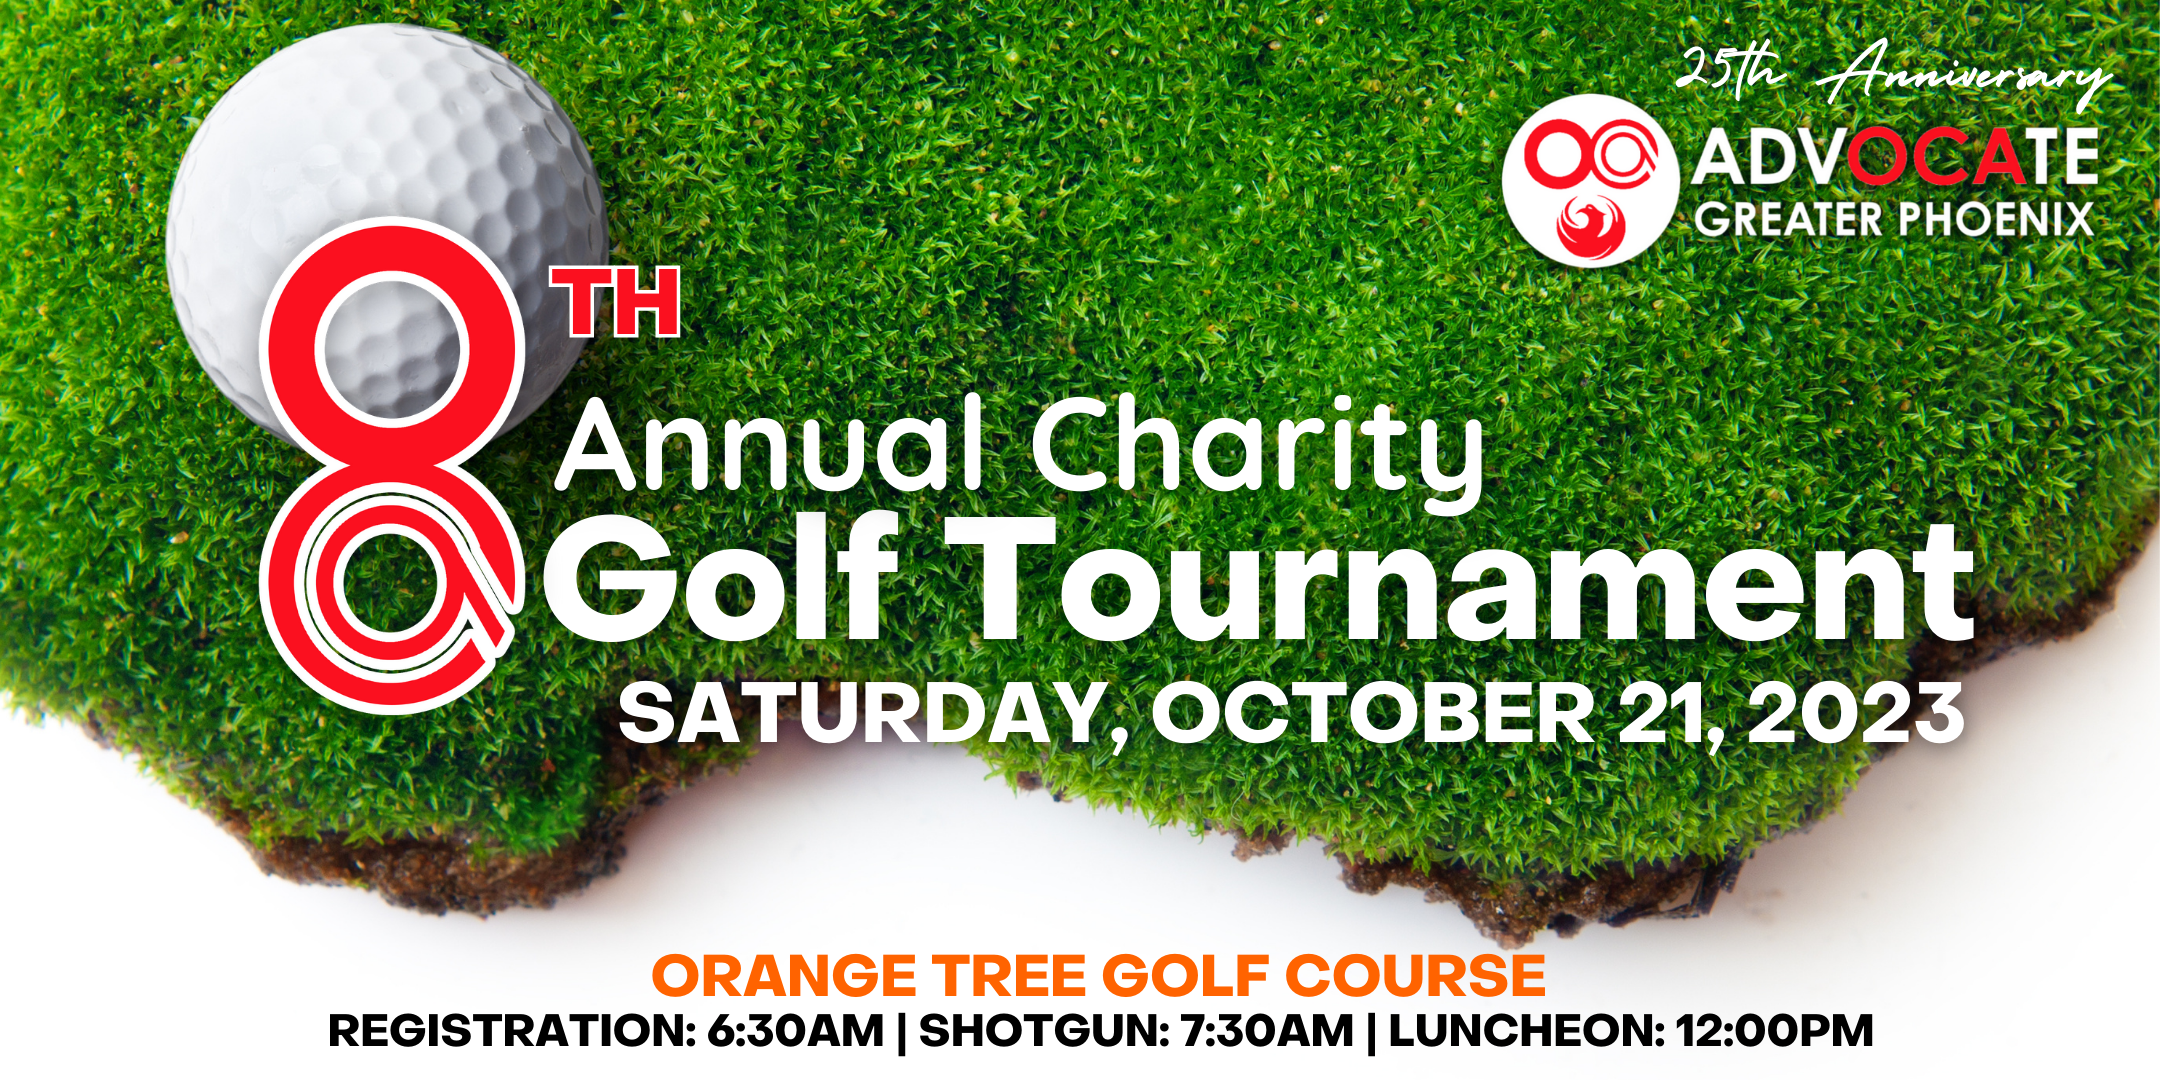 8th Annual Charity Golf Tournament